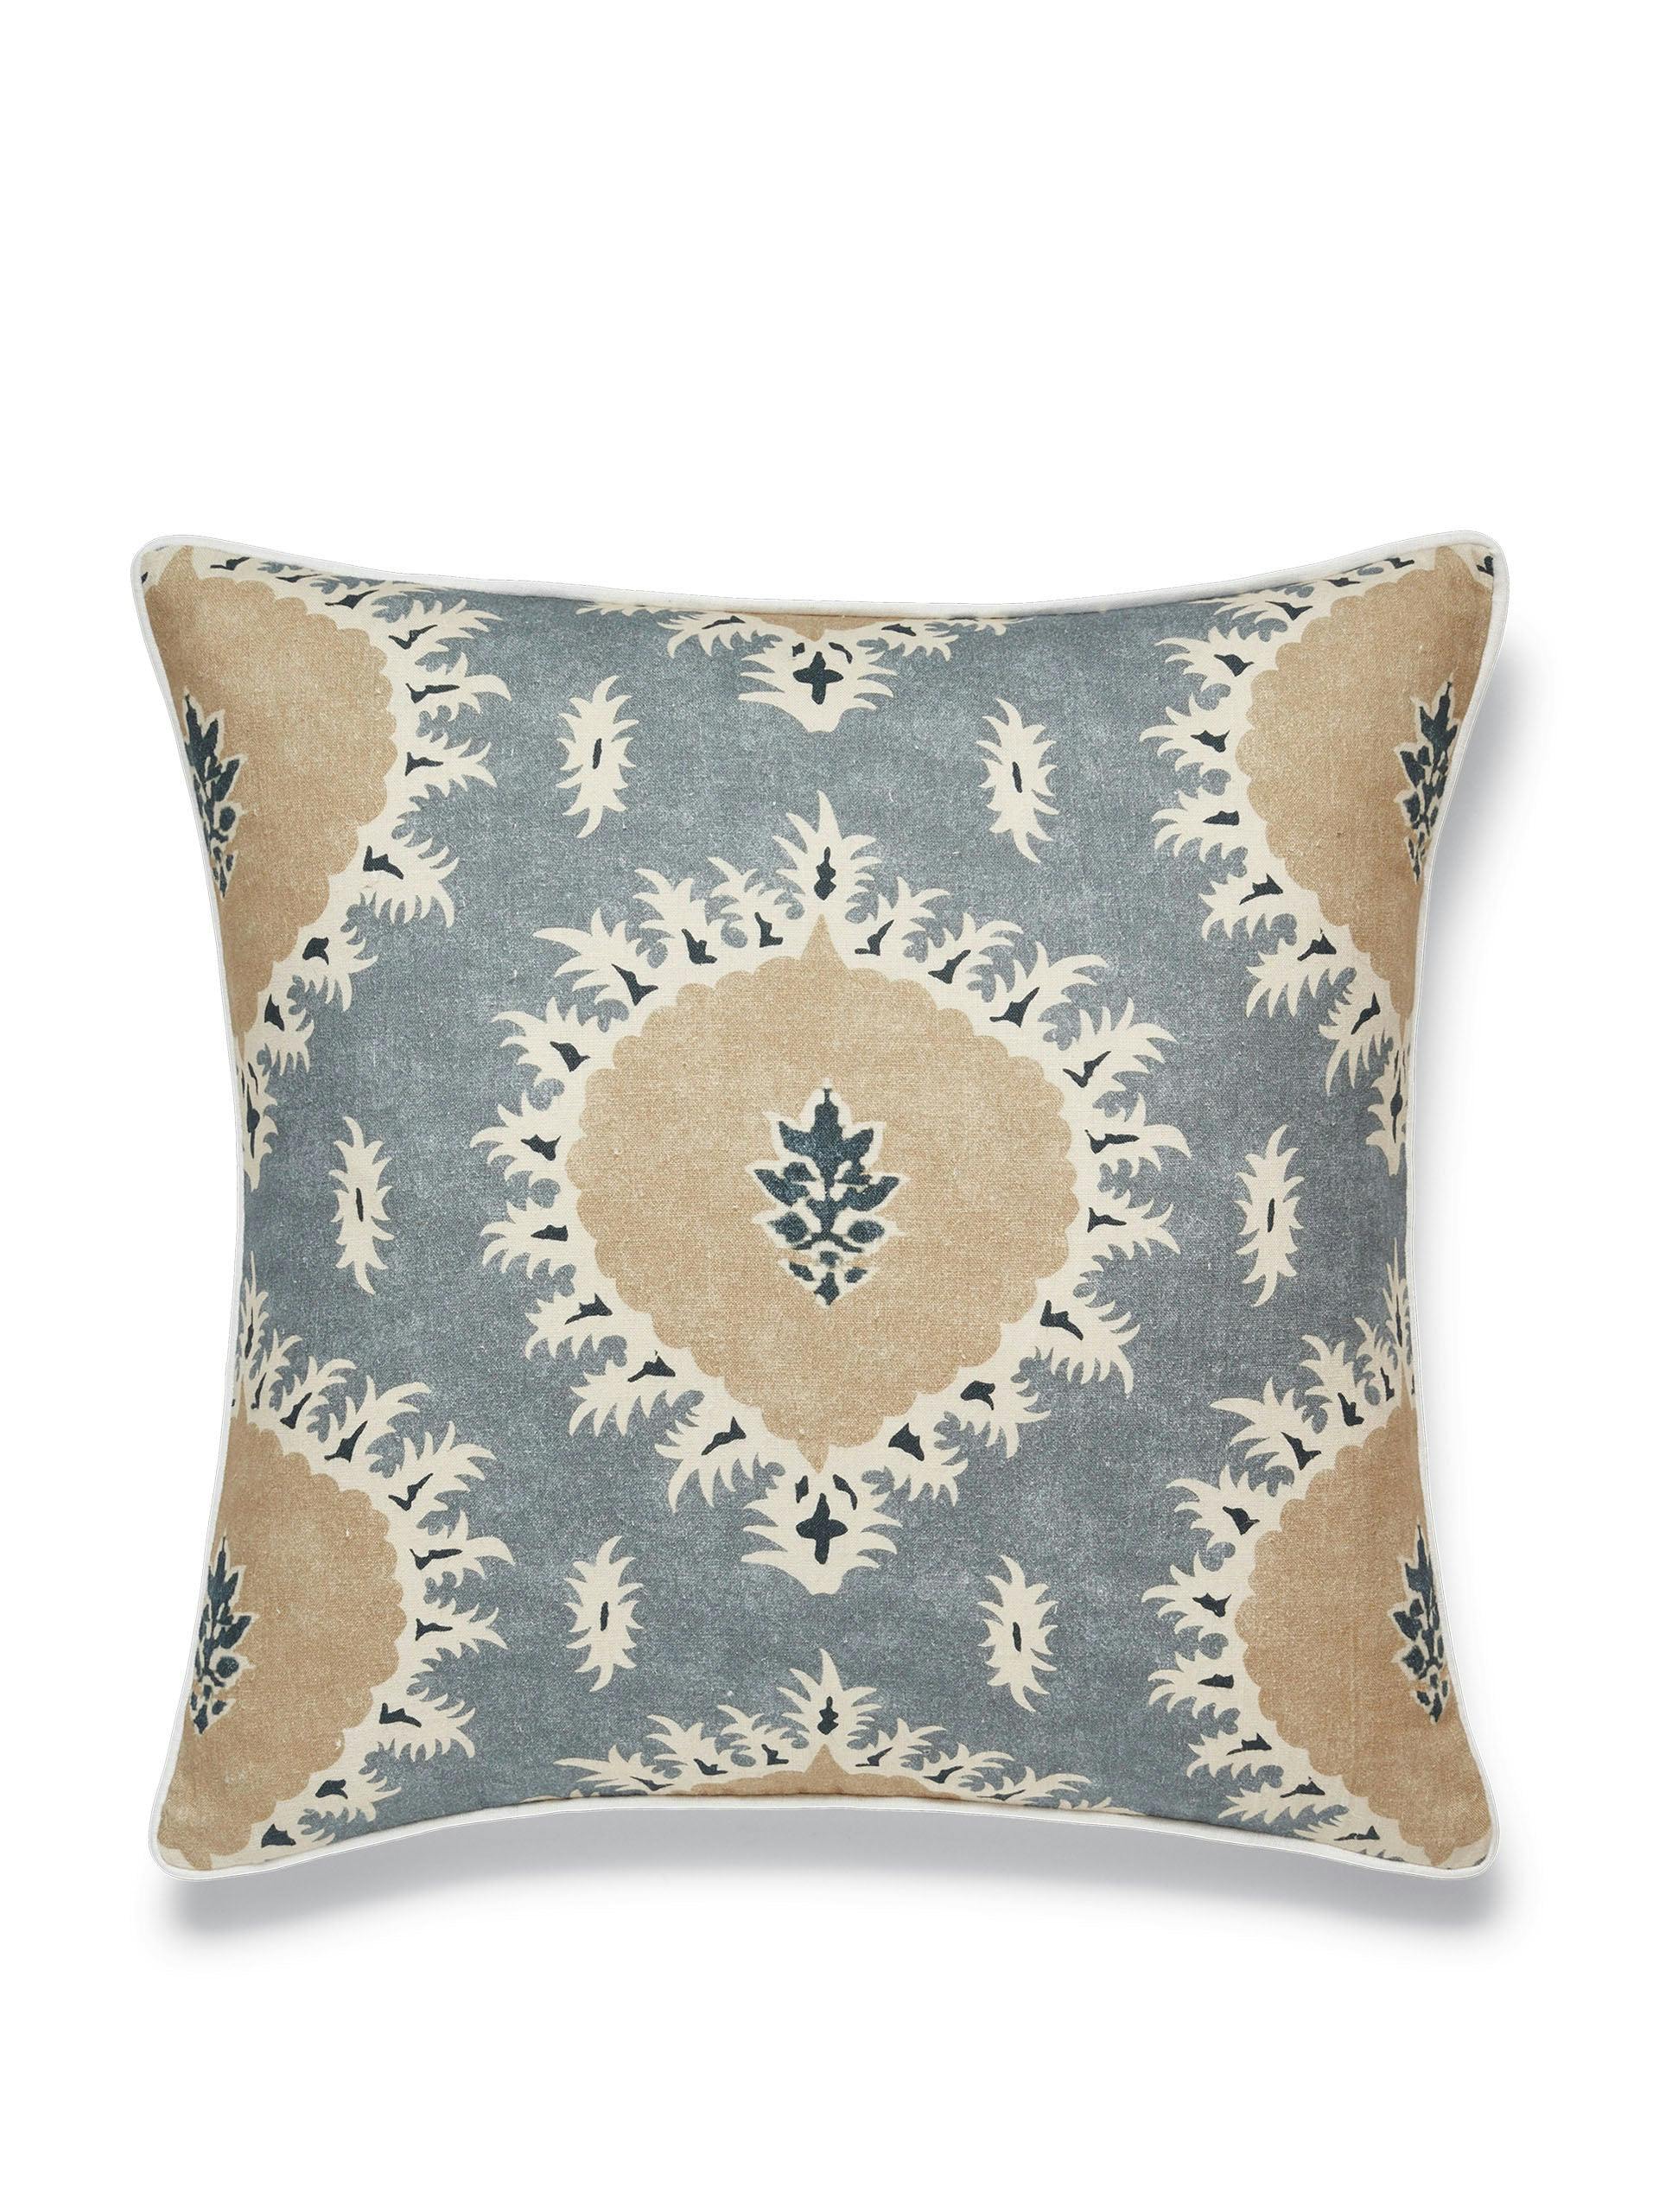 Drisana grey and blue cushion cover